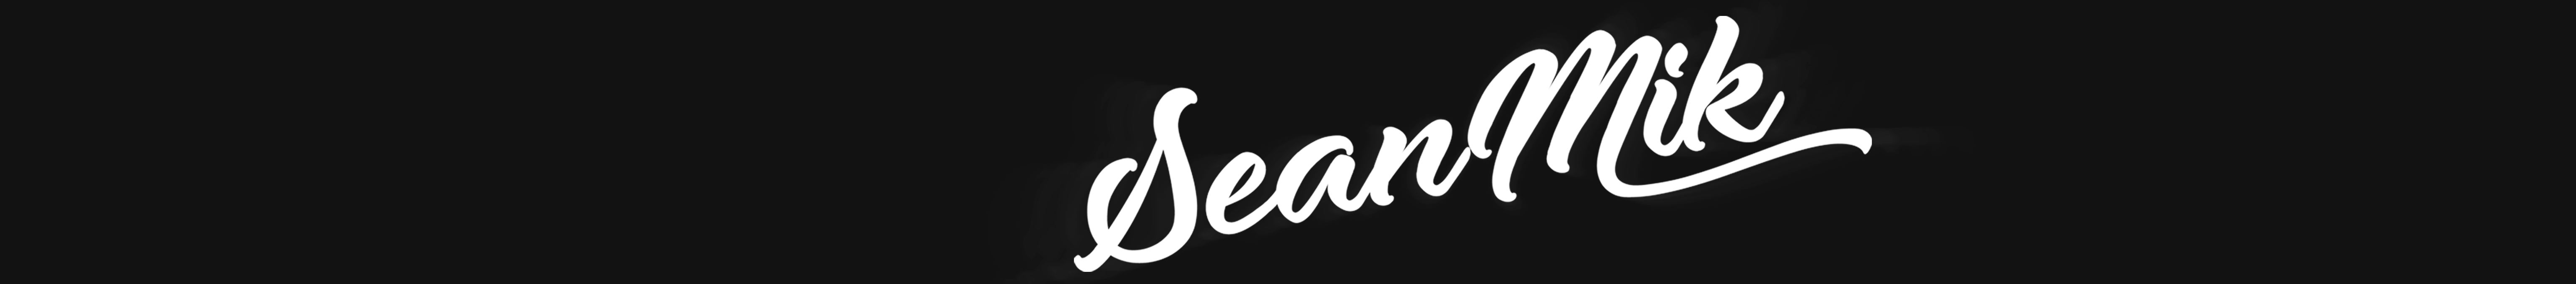 Banner de perfil de SEANMIK DESIGN